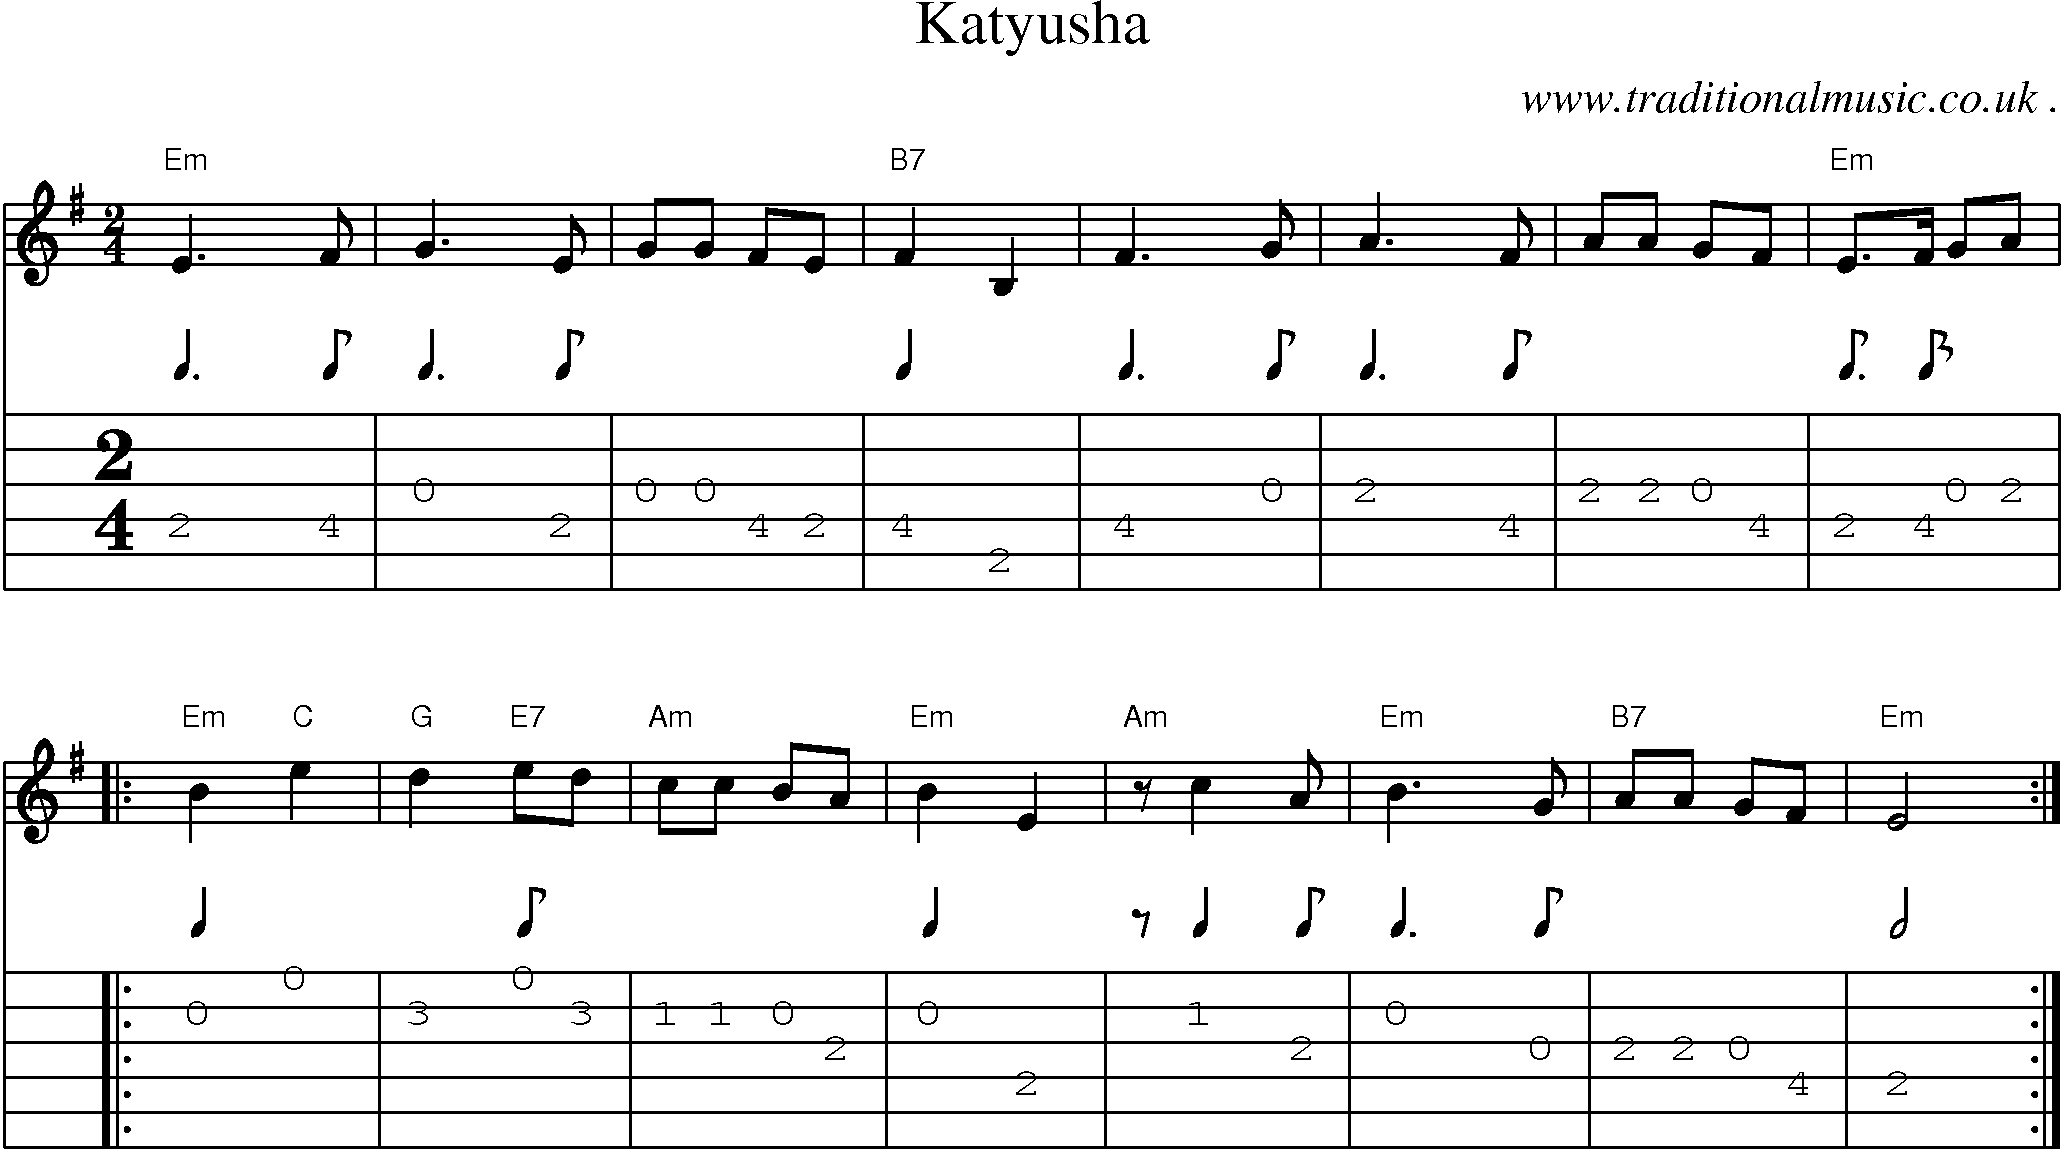 Music Score and Guitar Tabs for Katyusha